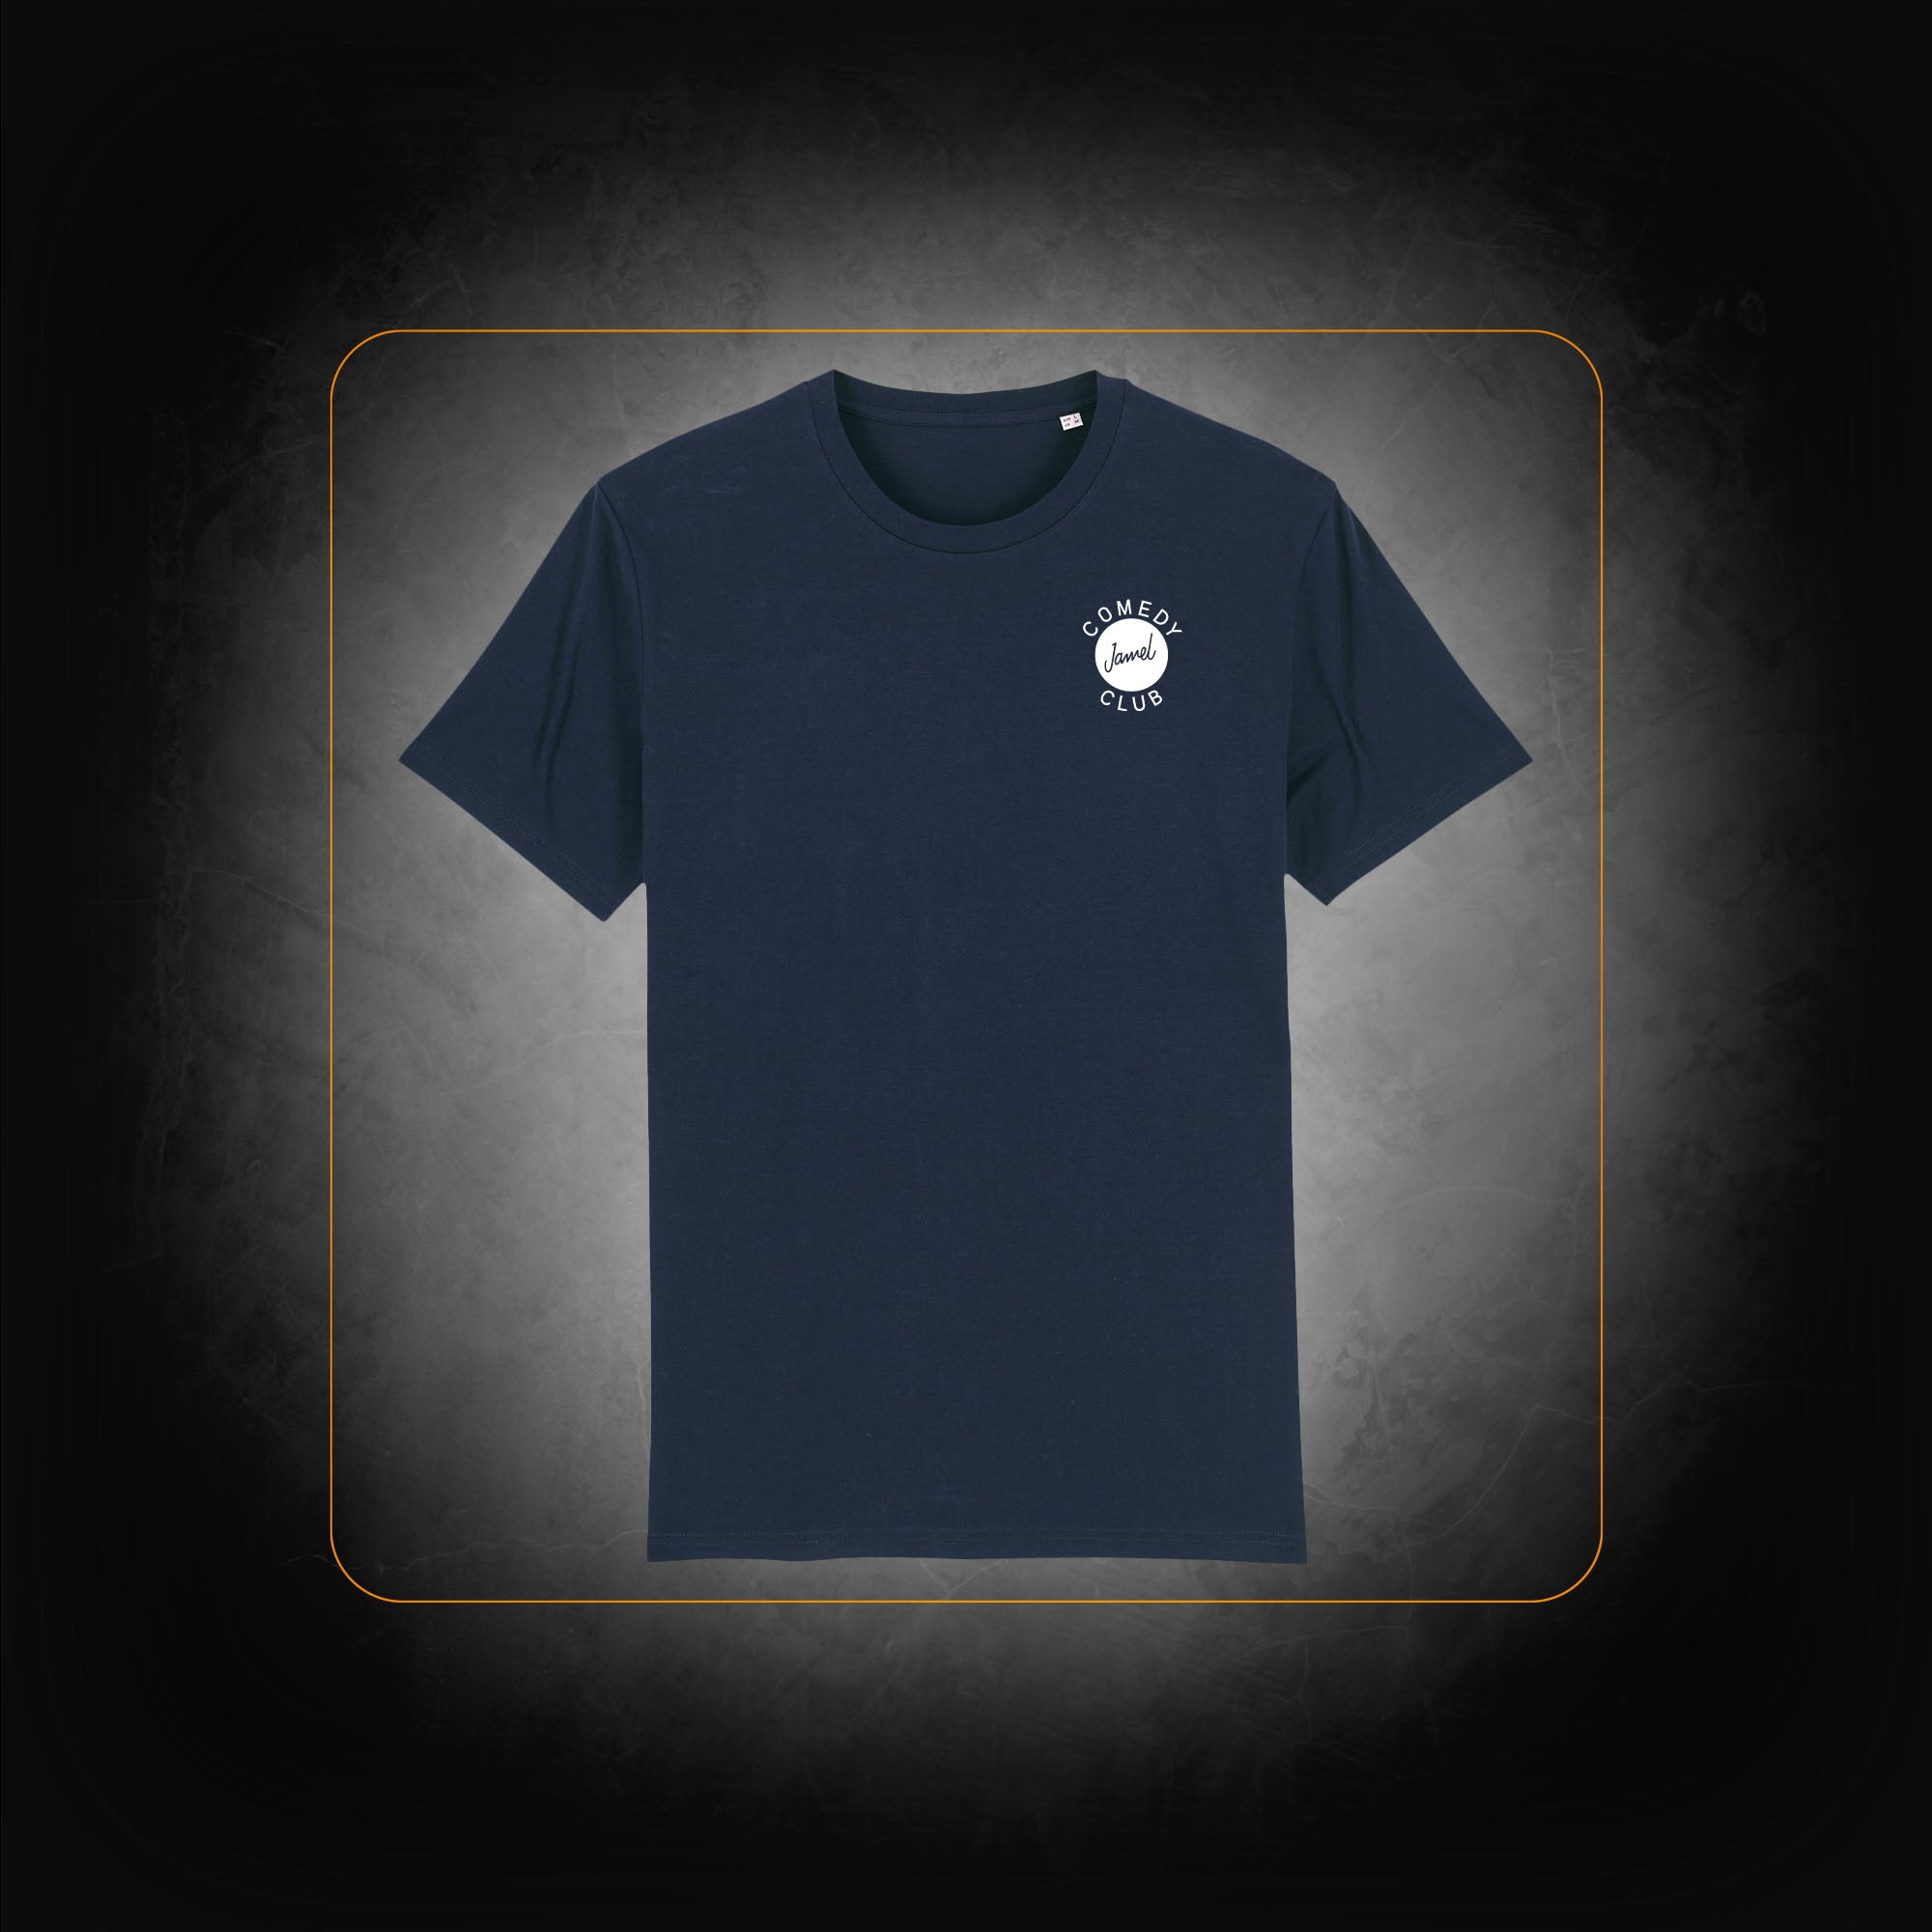 T-shirt Navy Logo coeur - Jamel Comedy Club